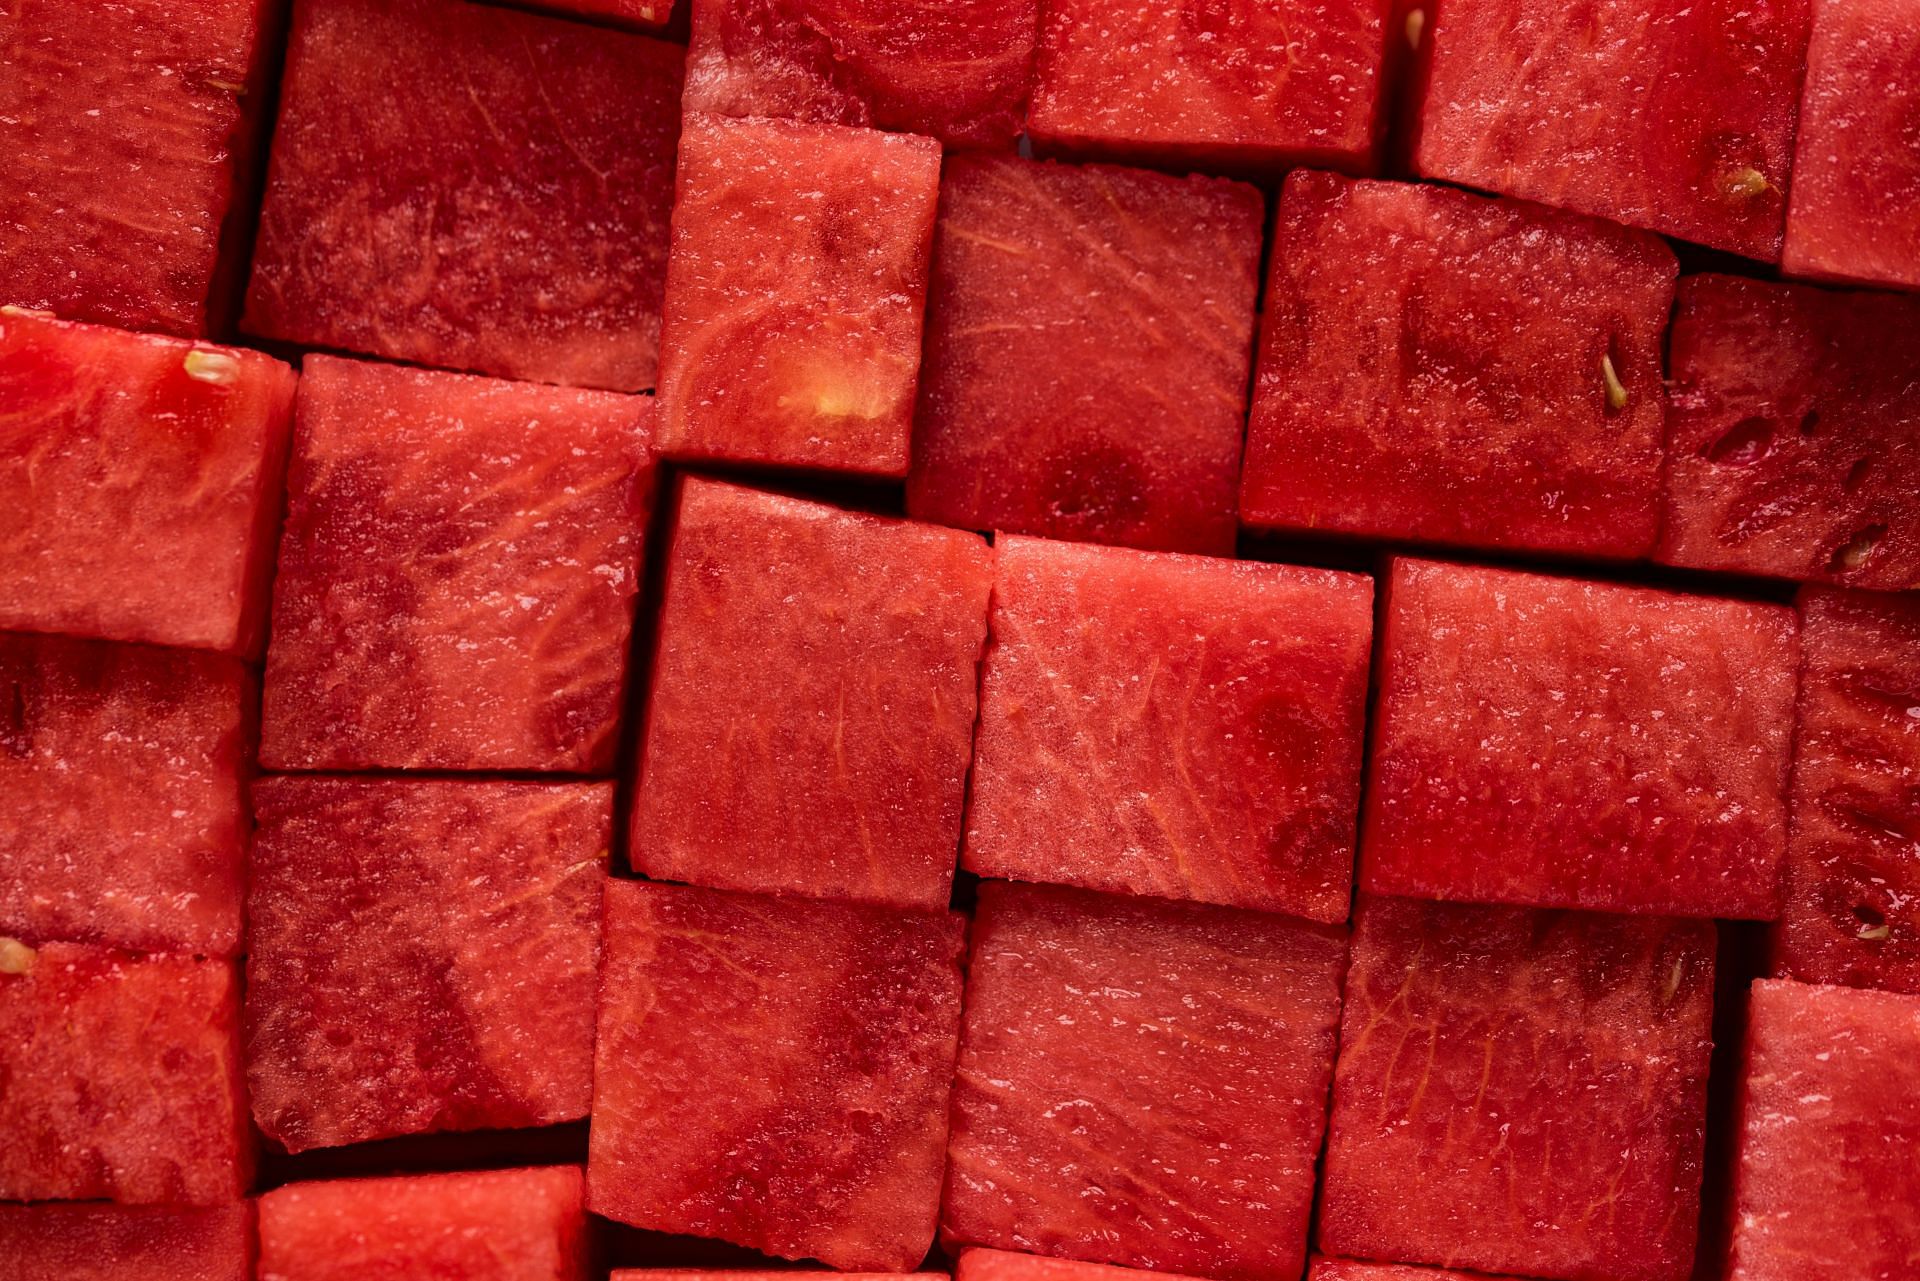 Watermelon slices to cool your body (Image by Joanna Kosinska/Unsplash)